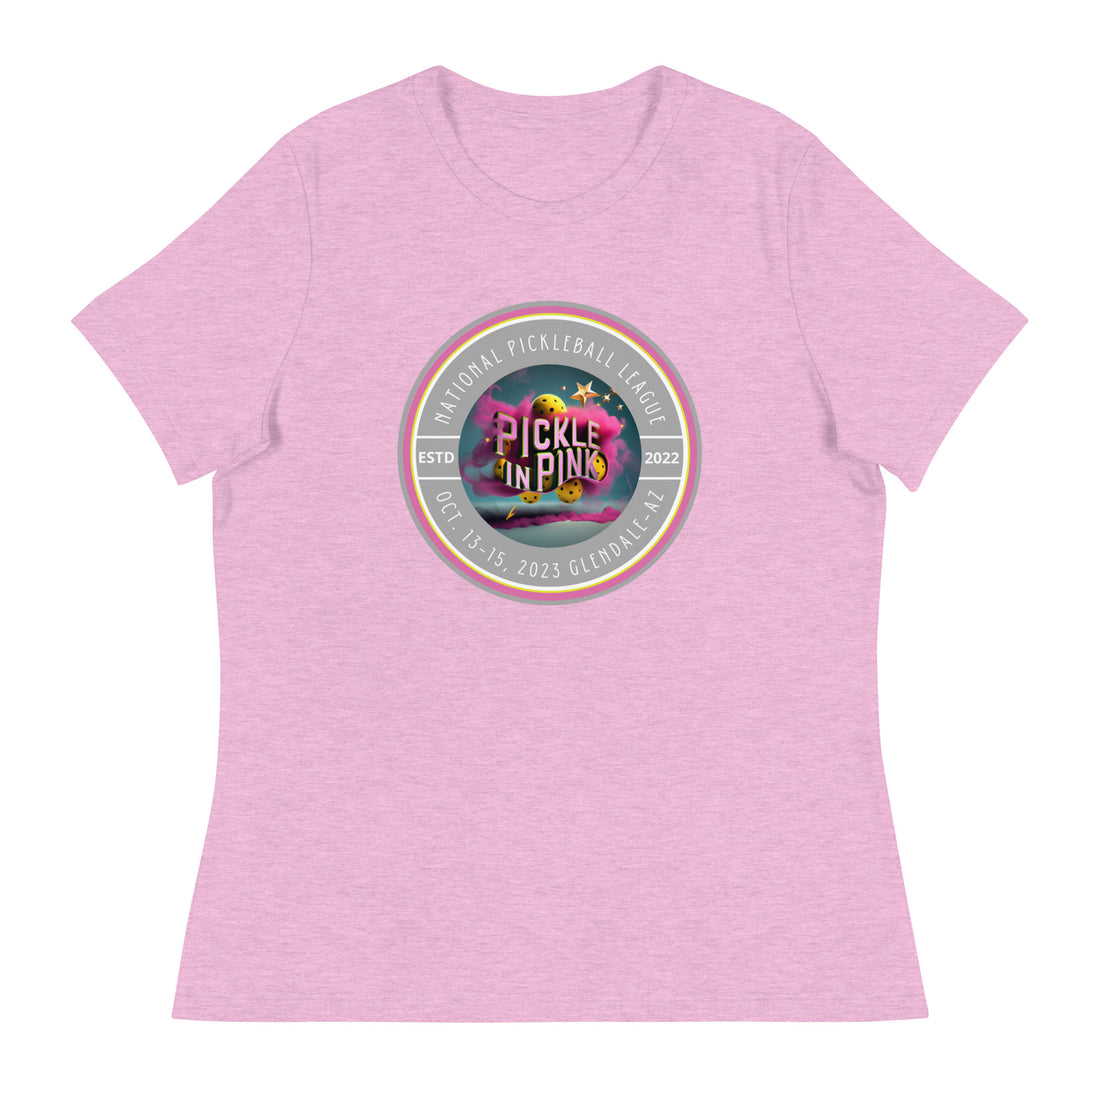 NPL™ "Pickle in Pink" Basic Cotton Women's Short Sleeve Shirt - A Splash of Pink for Pickleball Lovers!